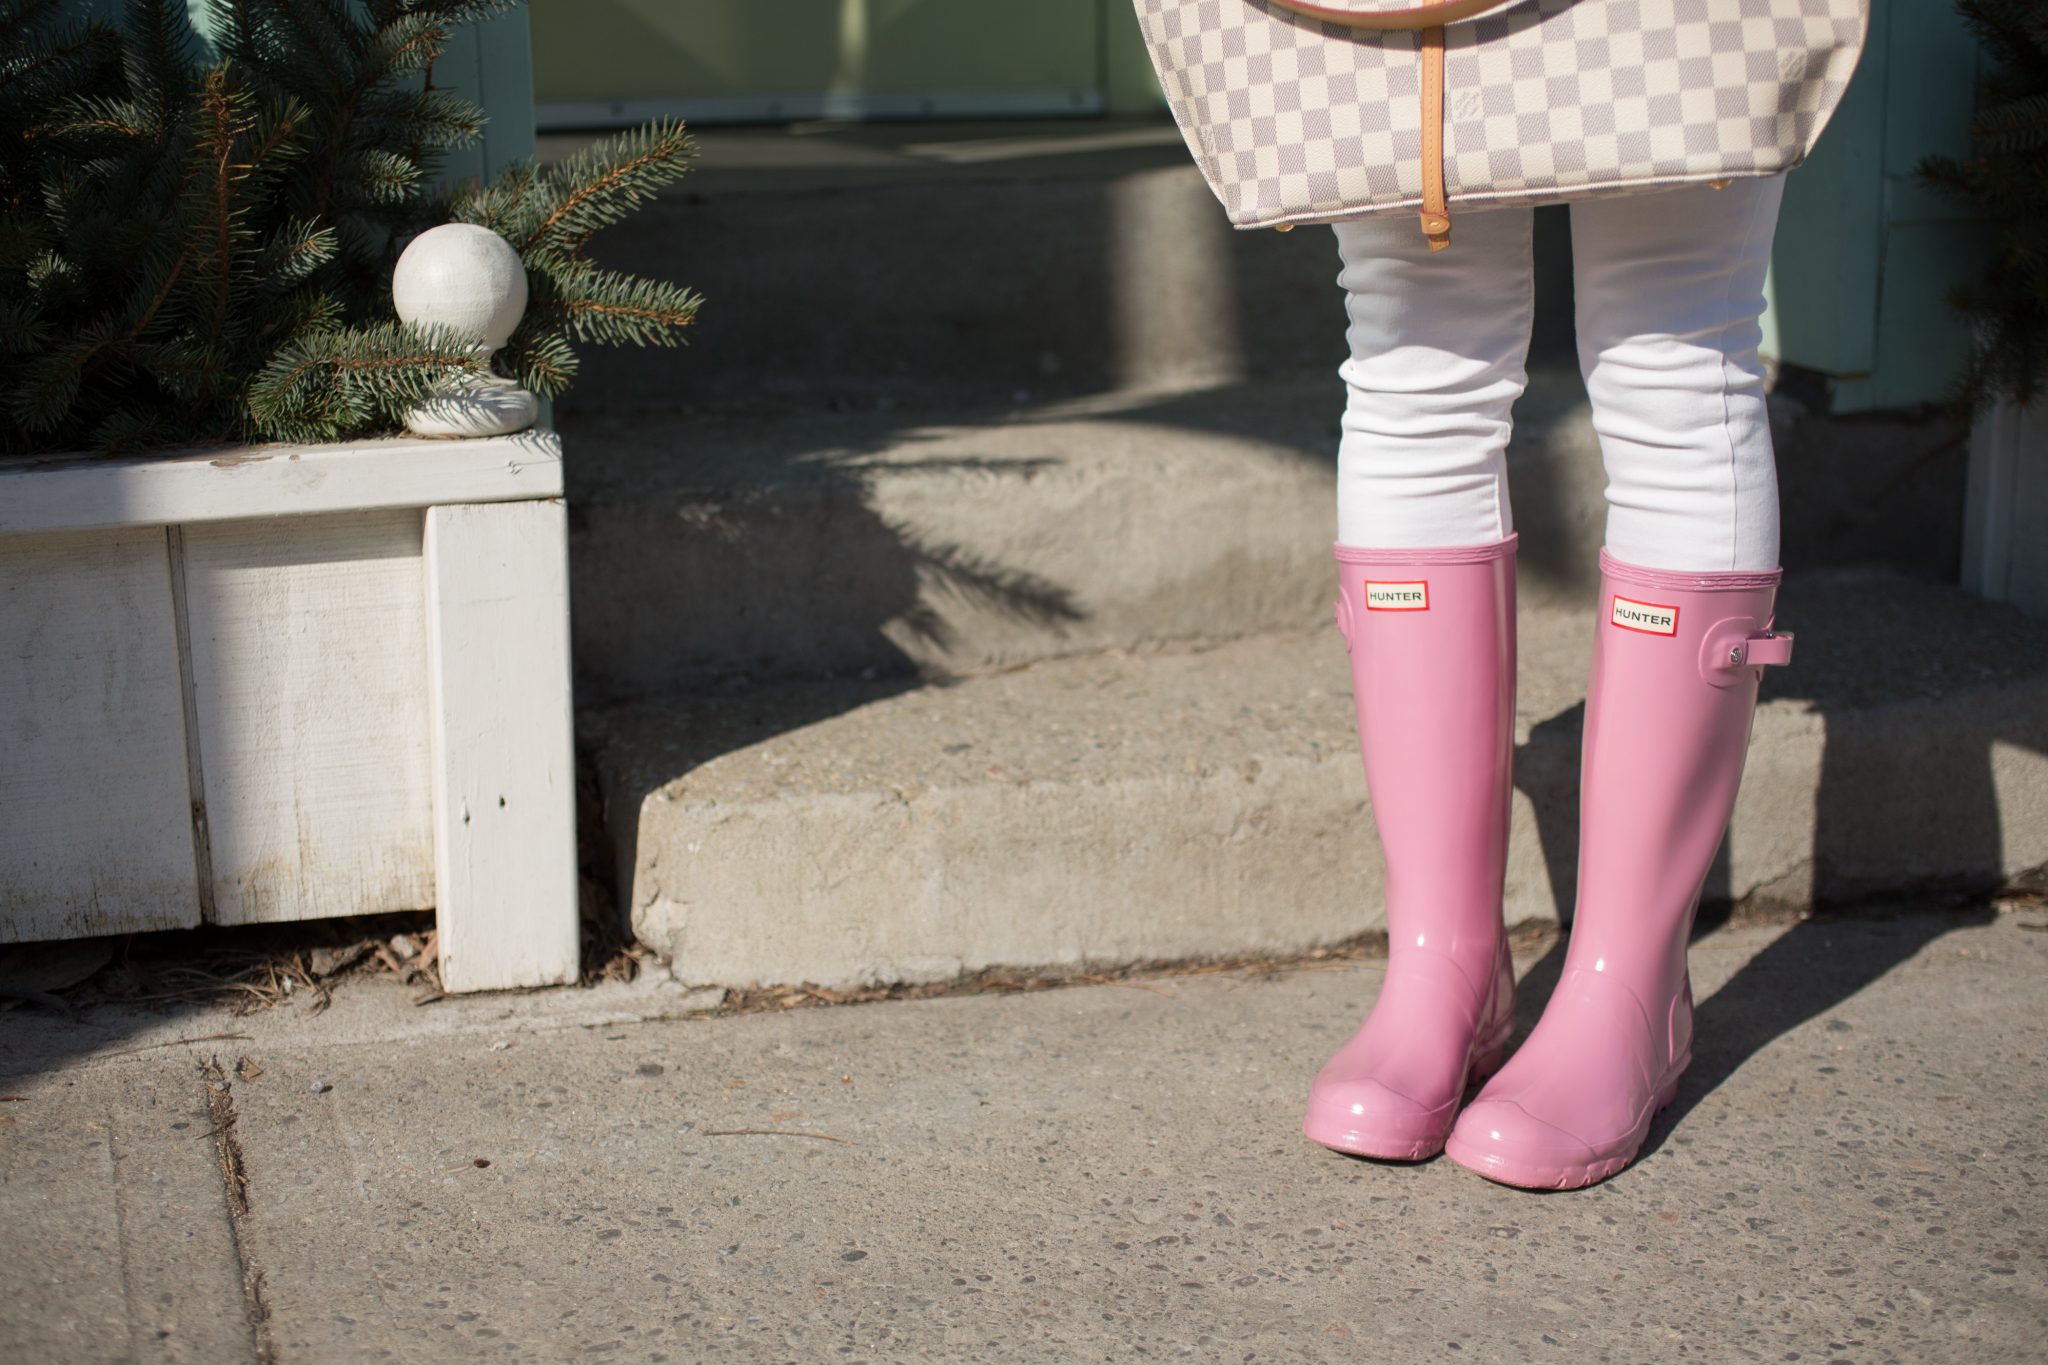 Zara Grey Bell Sleeve Top, White Jeans, Pink Hunter Boots, Louis Vuitton Girolata Bag